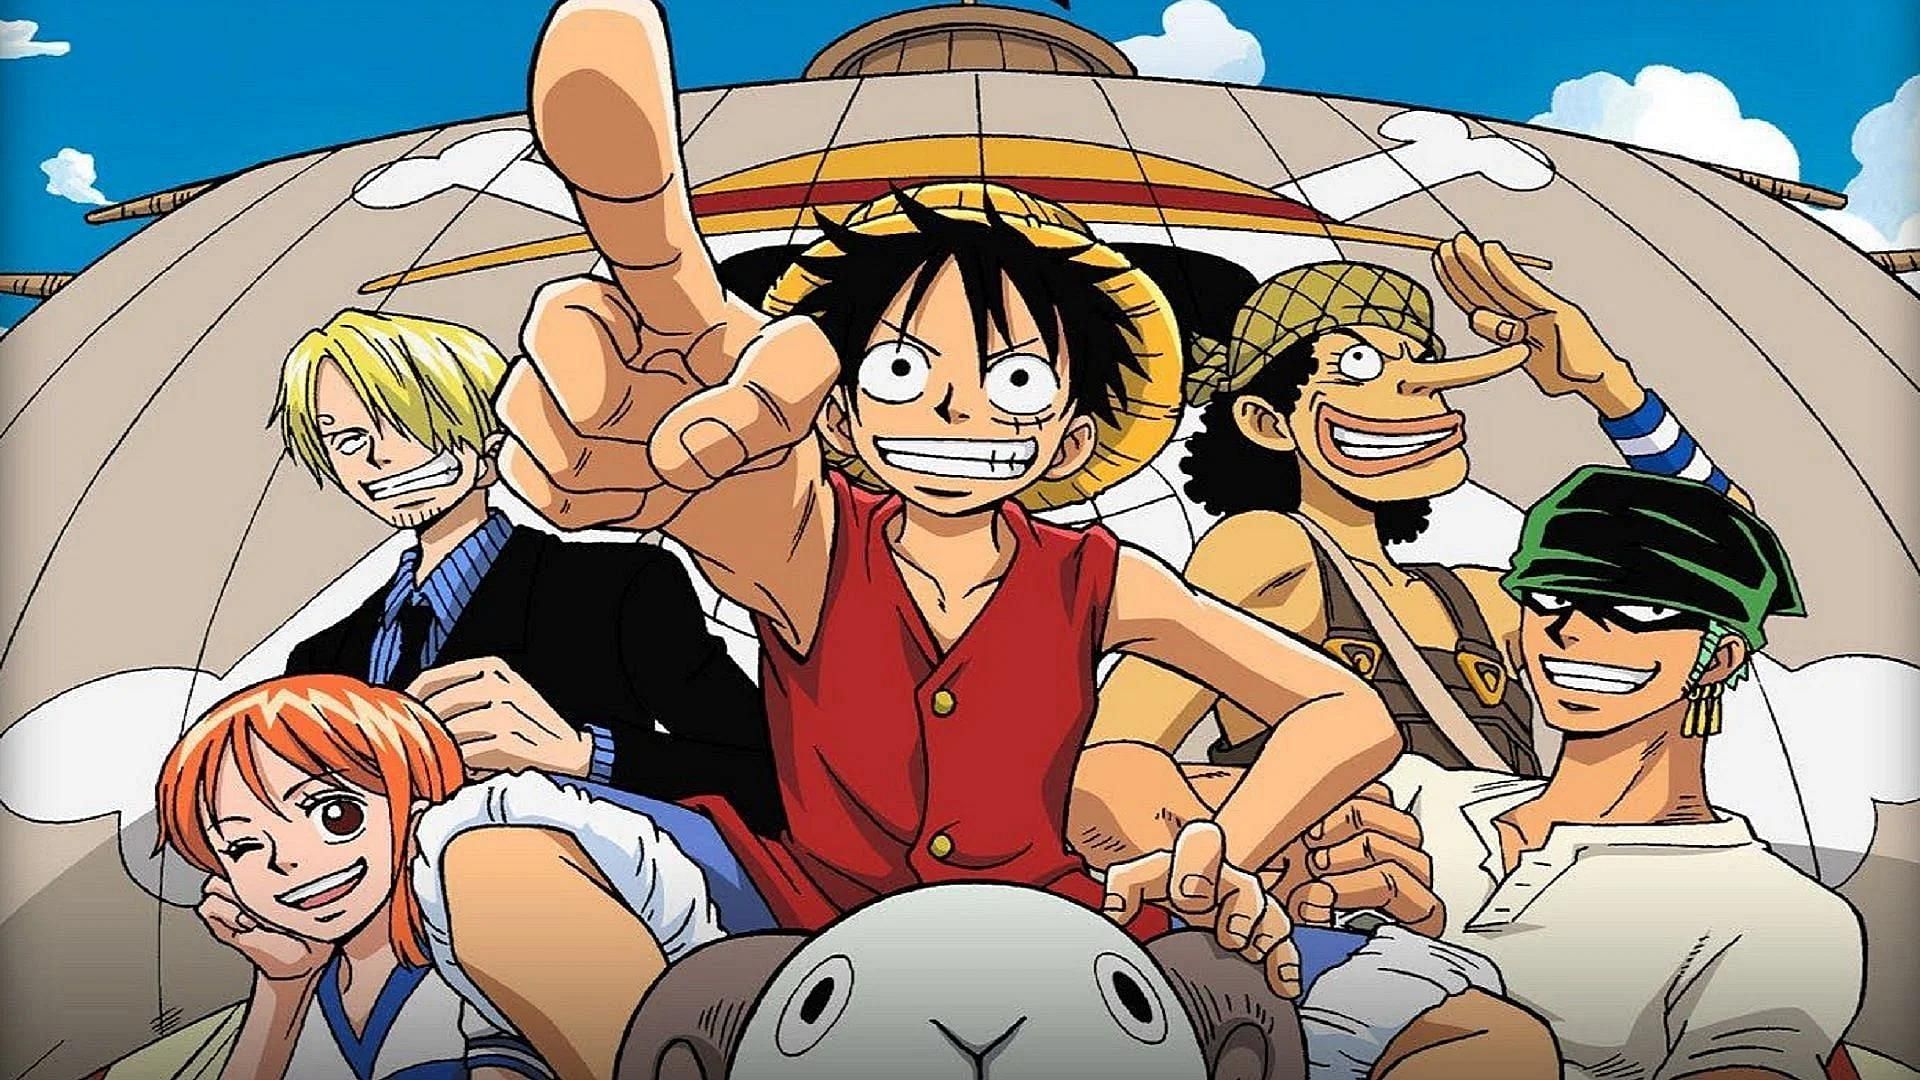 East Blue Saga from the One Piece (Image via Toei Animation)